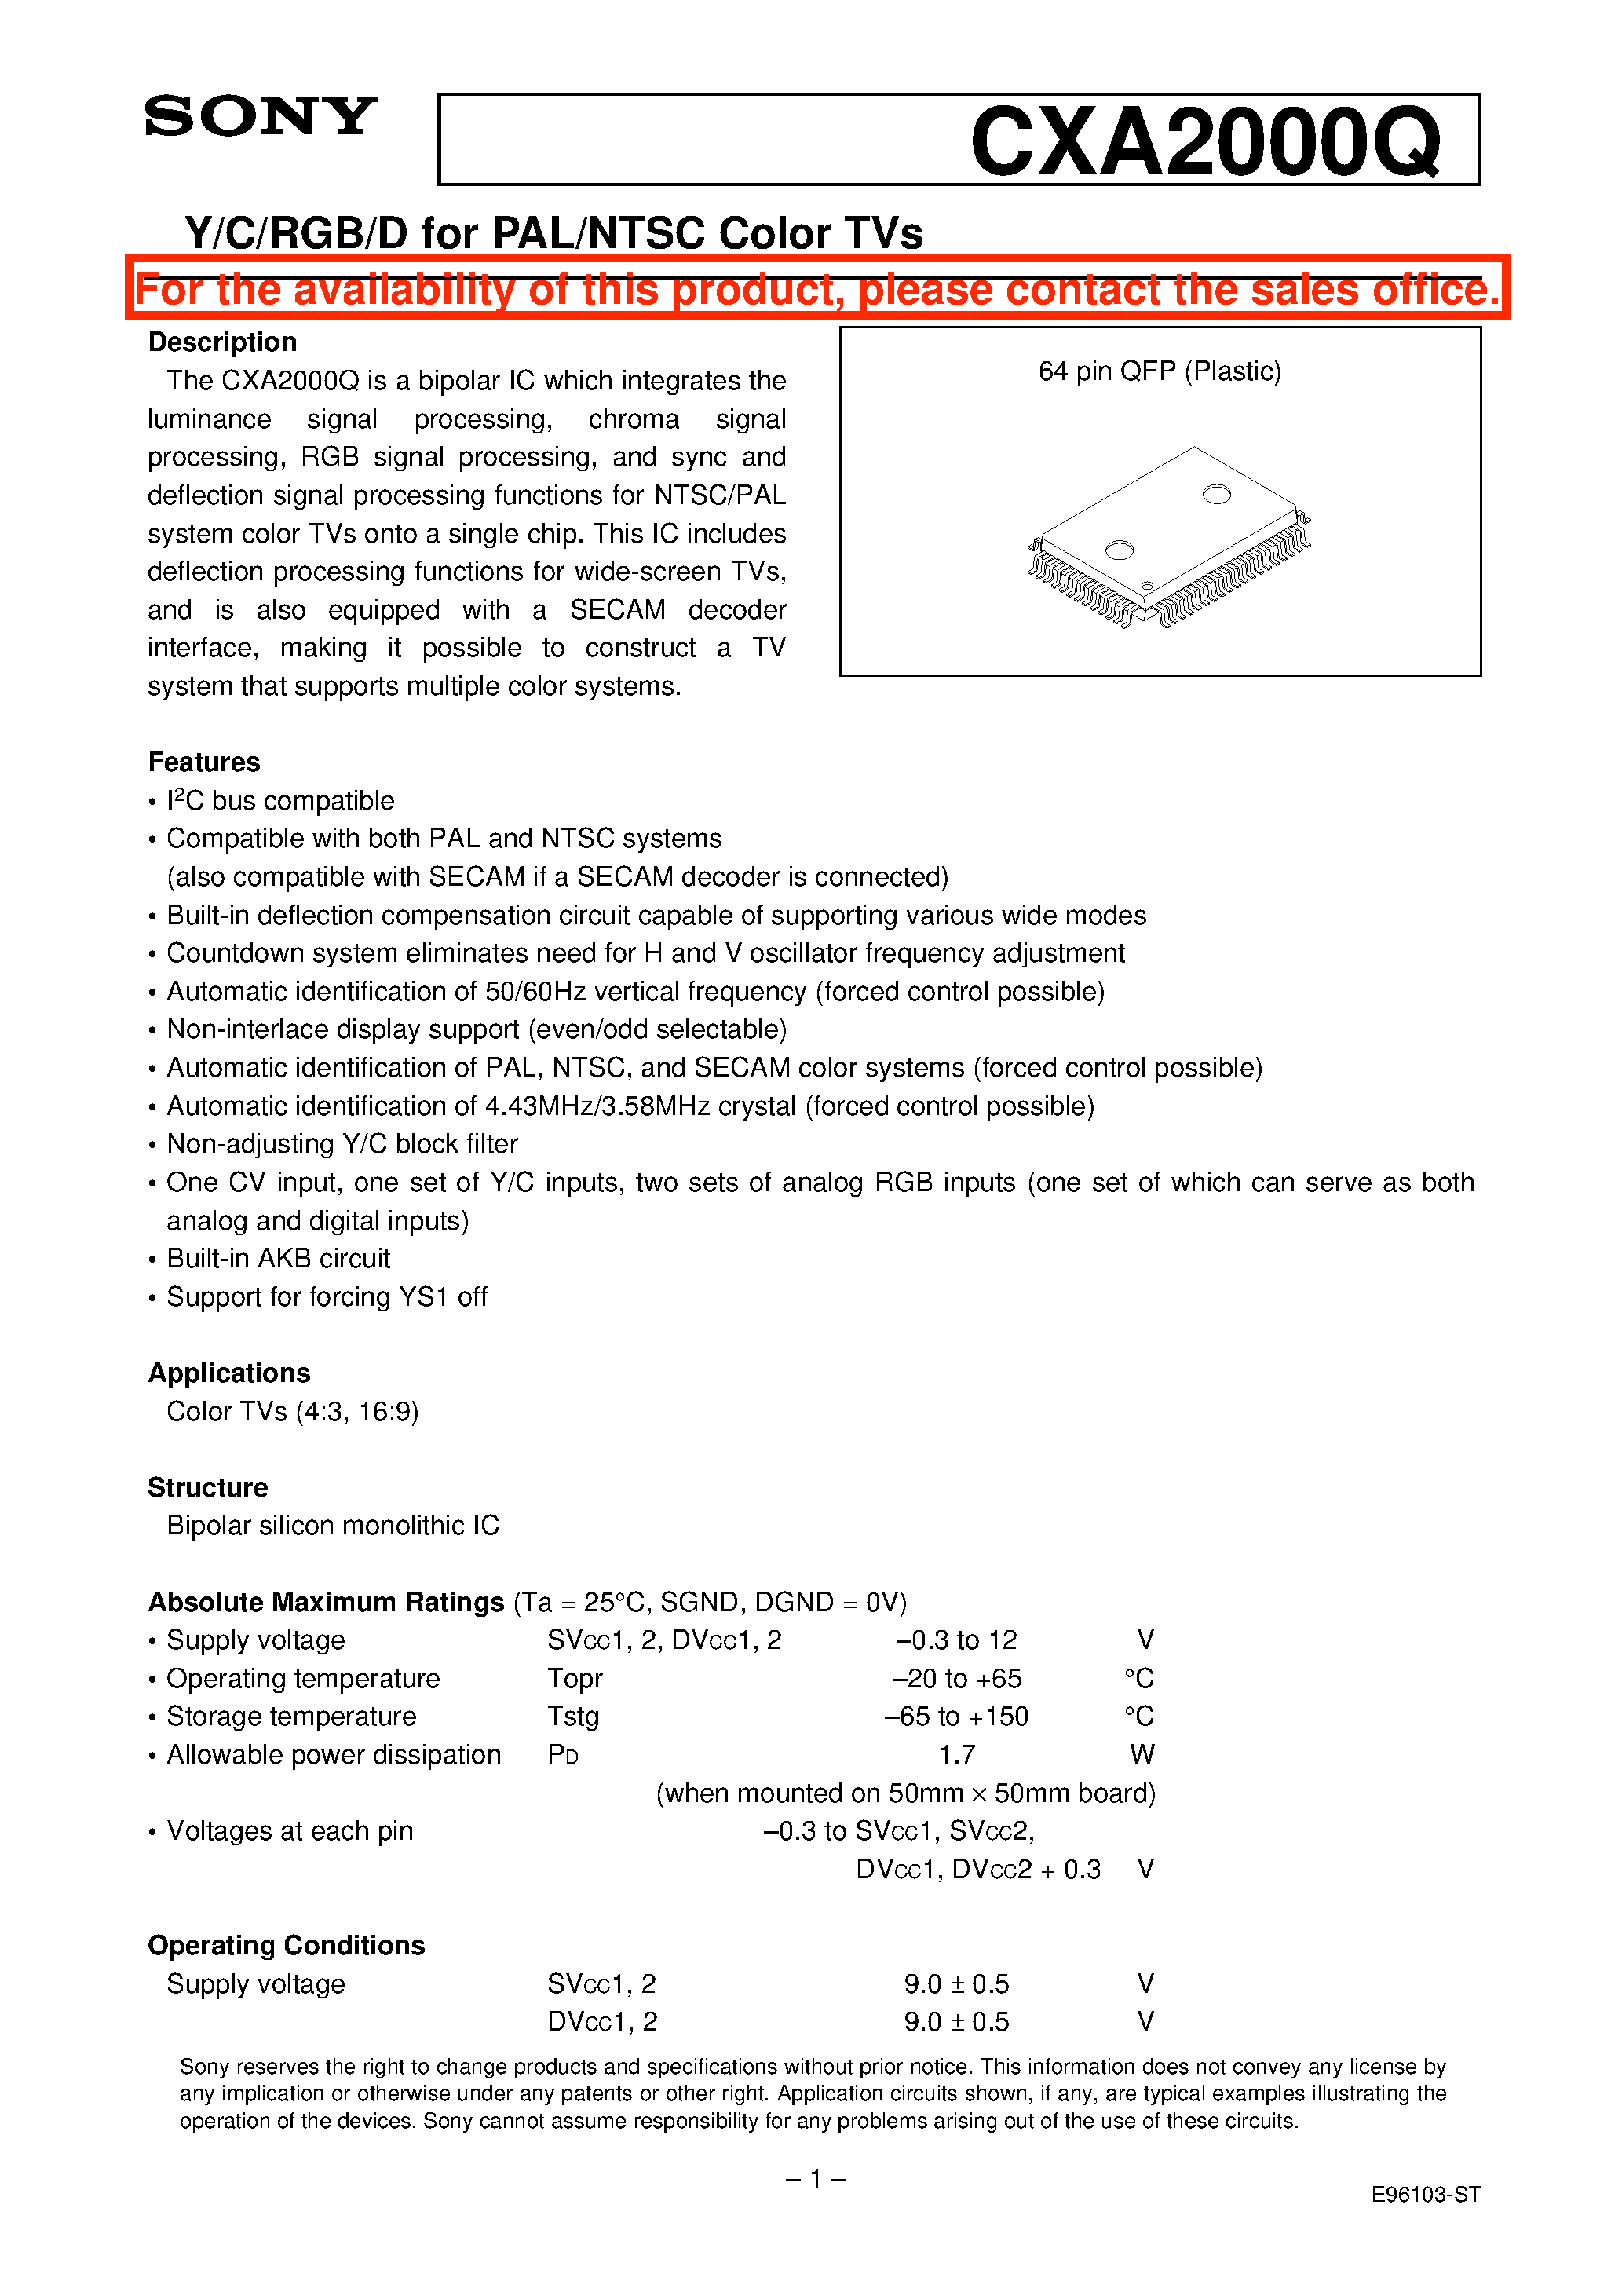 Datasheet CXA2000Q - Y/C/RGB/D for PAL/NTSC Color TVs page 1